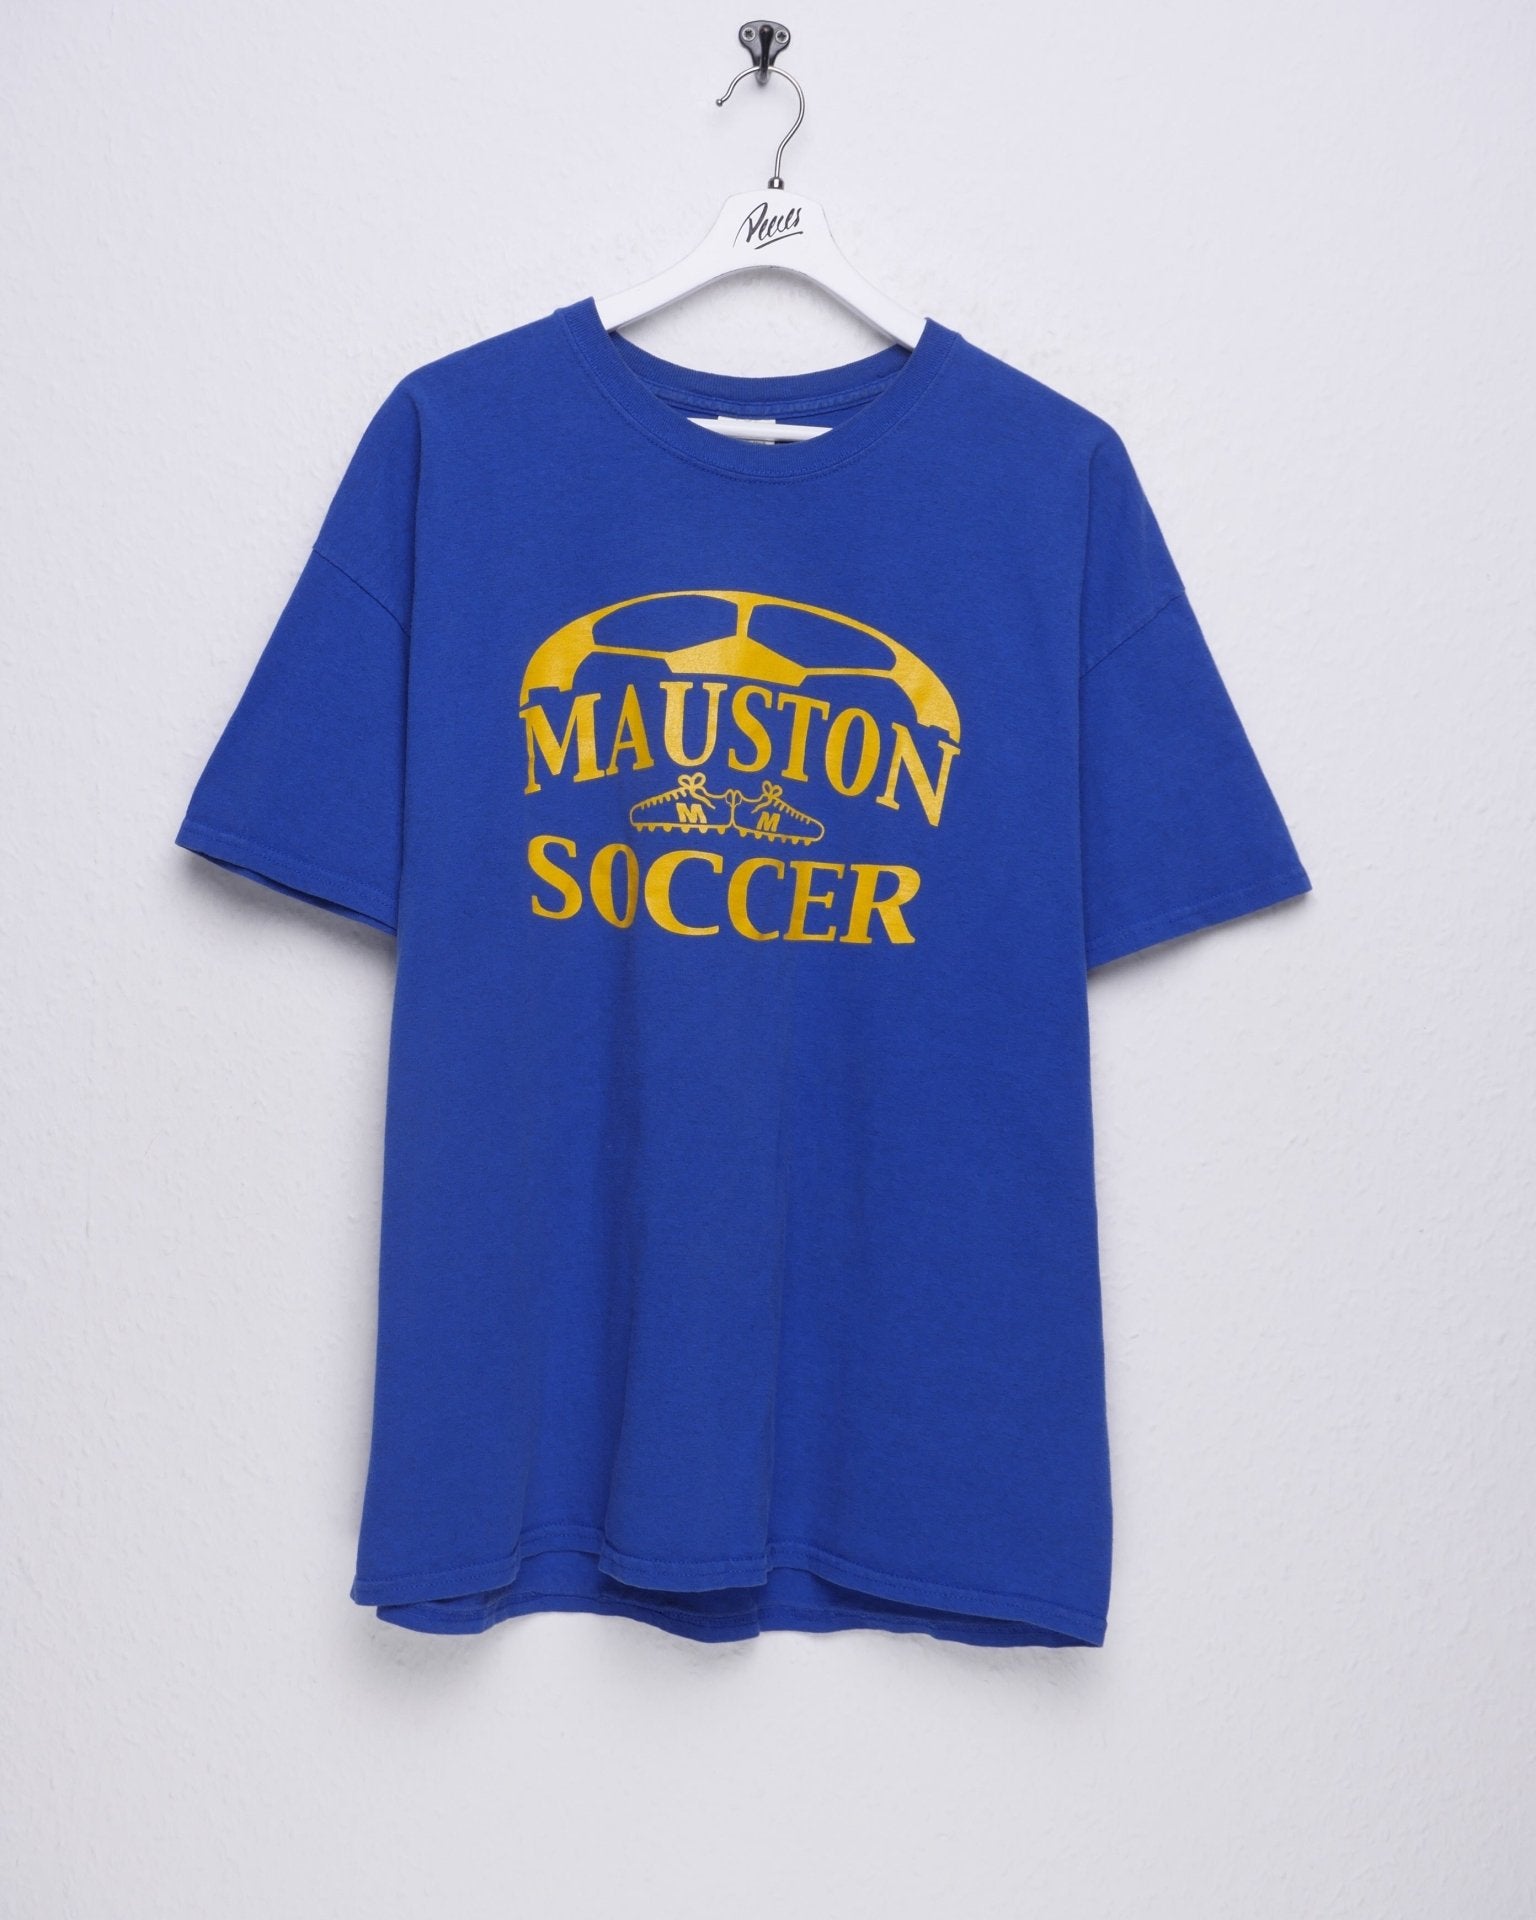 Mauston Soccer printed Logo Shirt - Peeces